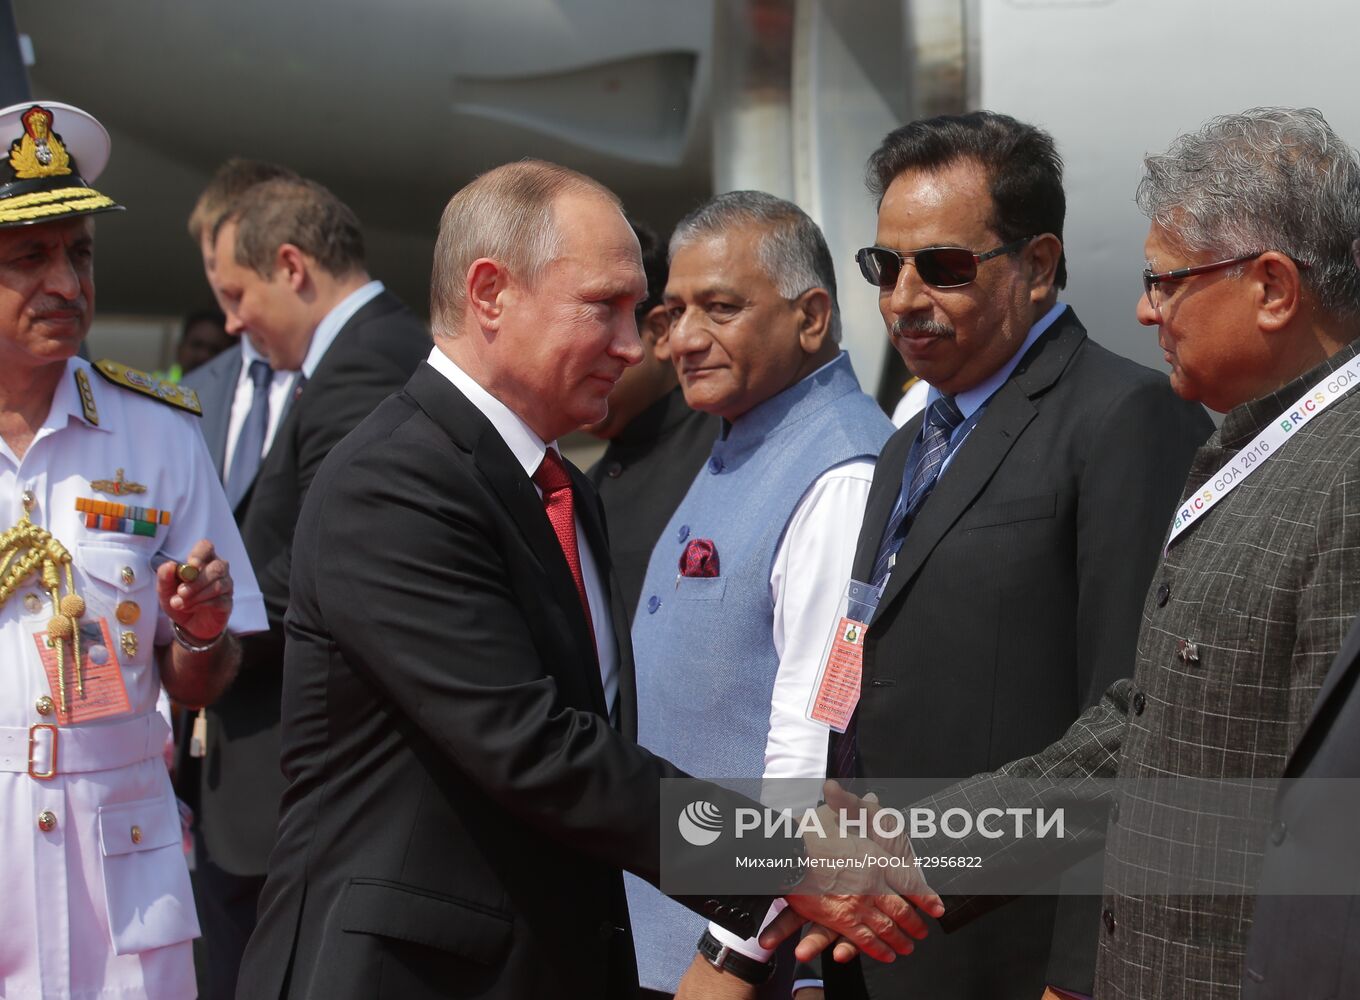 Визит президента РФ В. Путина в Республику Индию (Гоа)